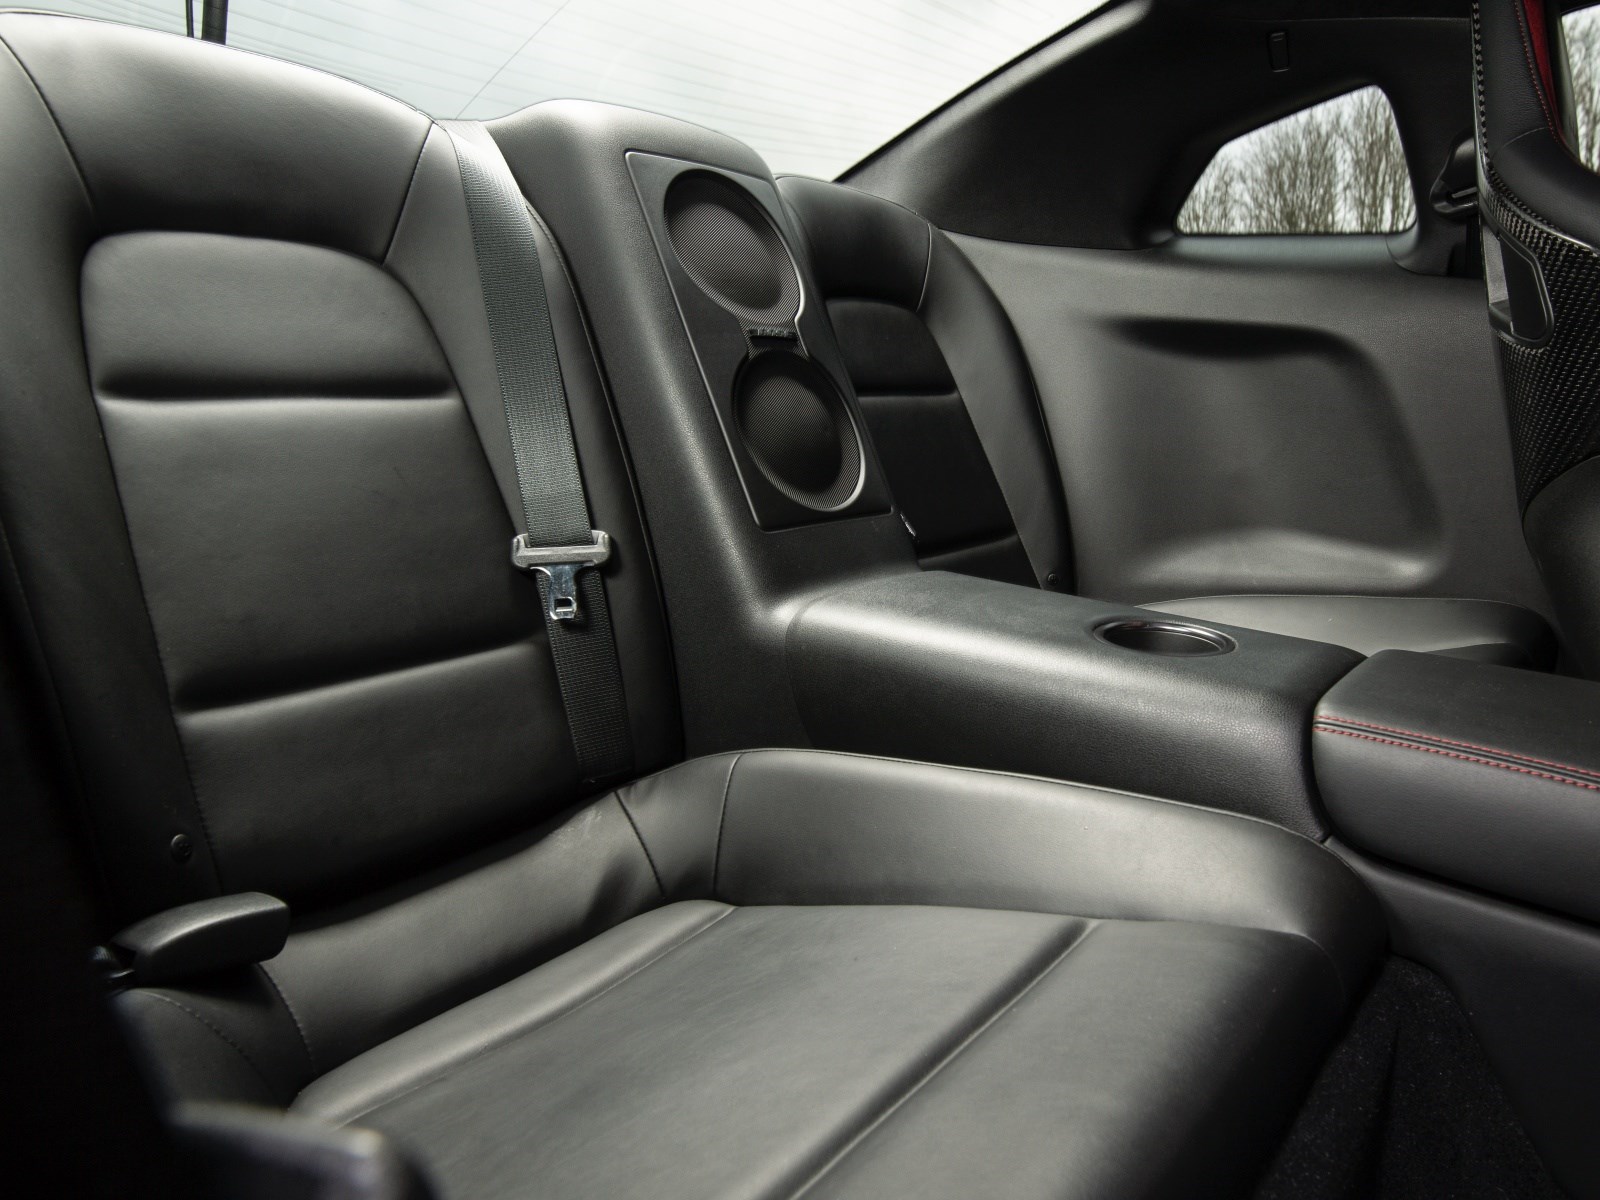 Nissan GT-R Interior Layout & Technology | Top Gear